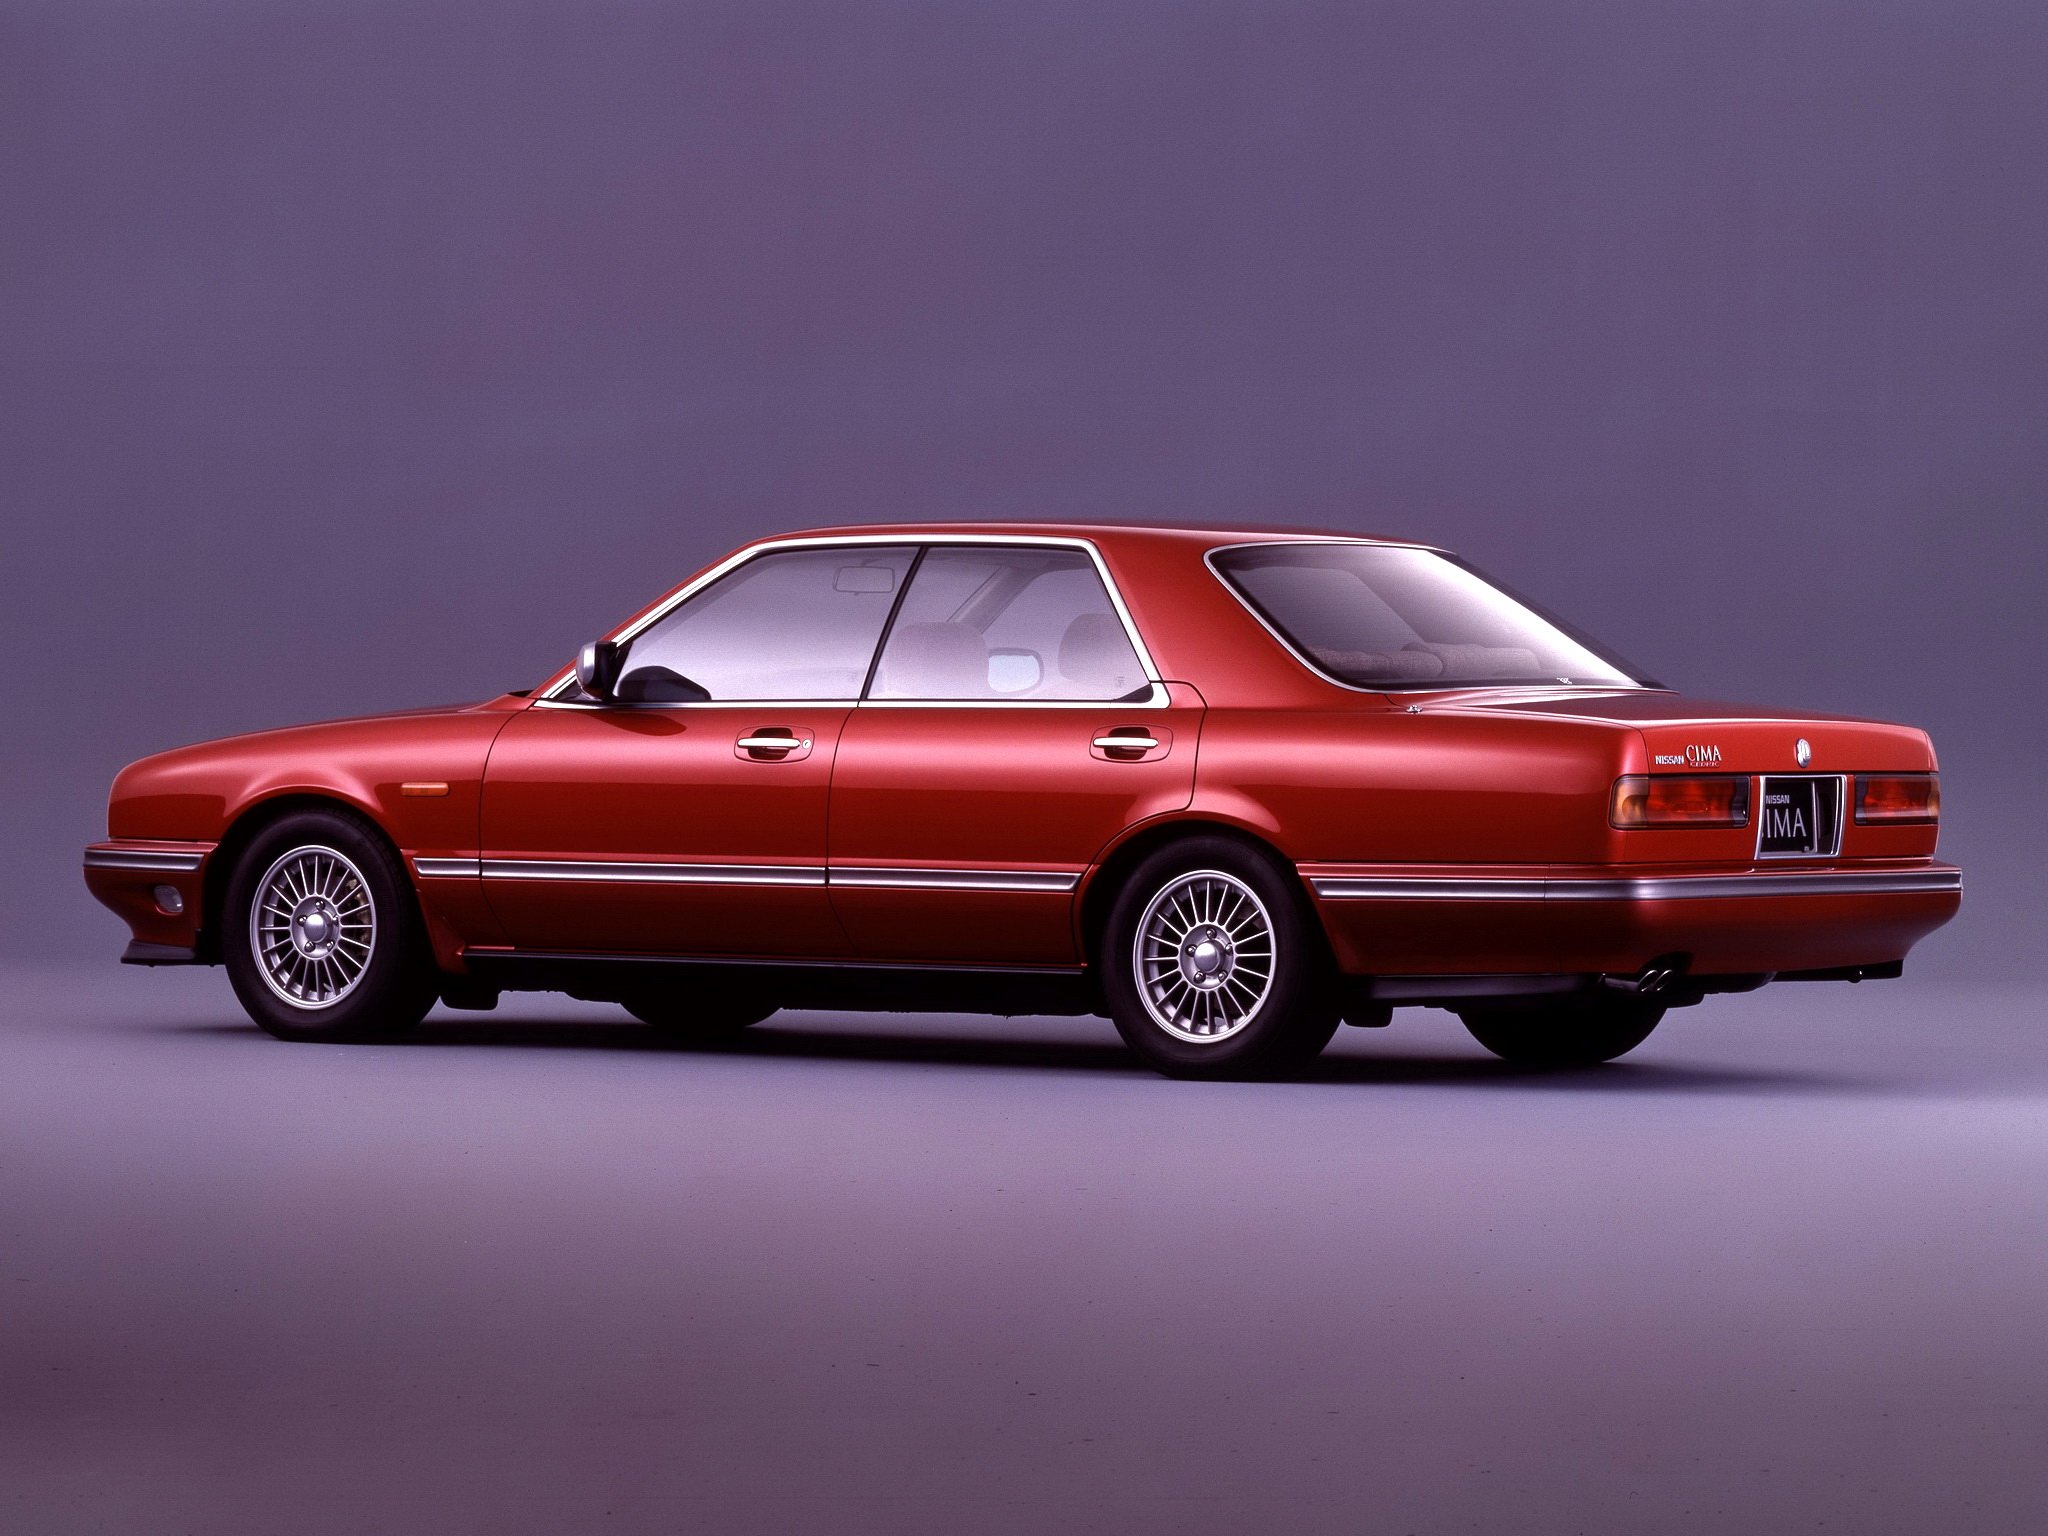 1988 91, Nissan, Cedric, Cima, Luxury Wallpaper